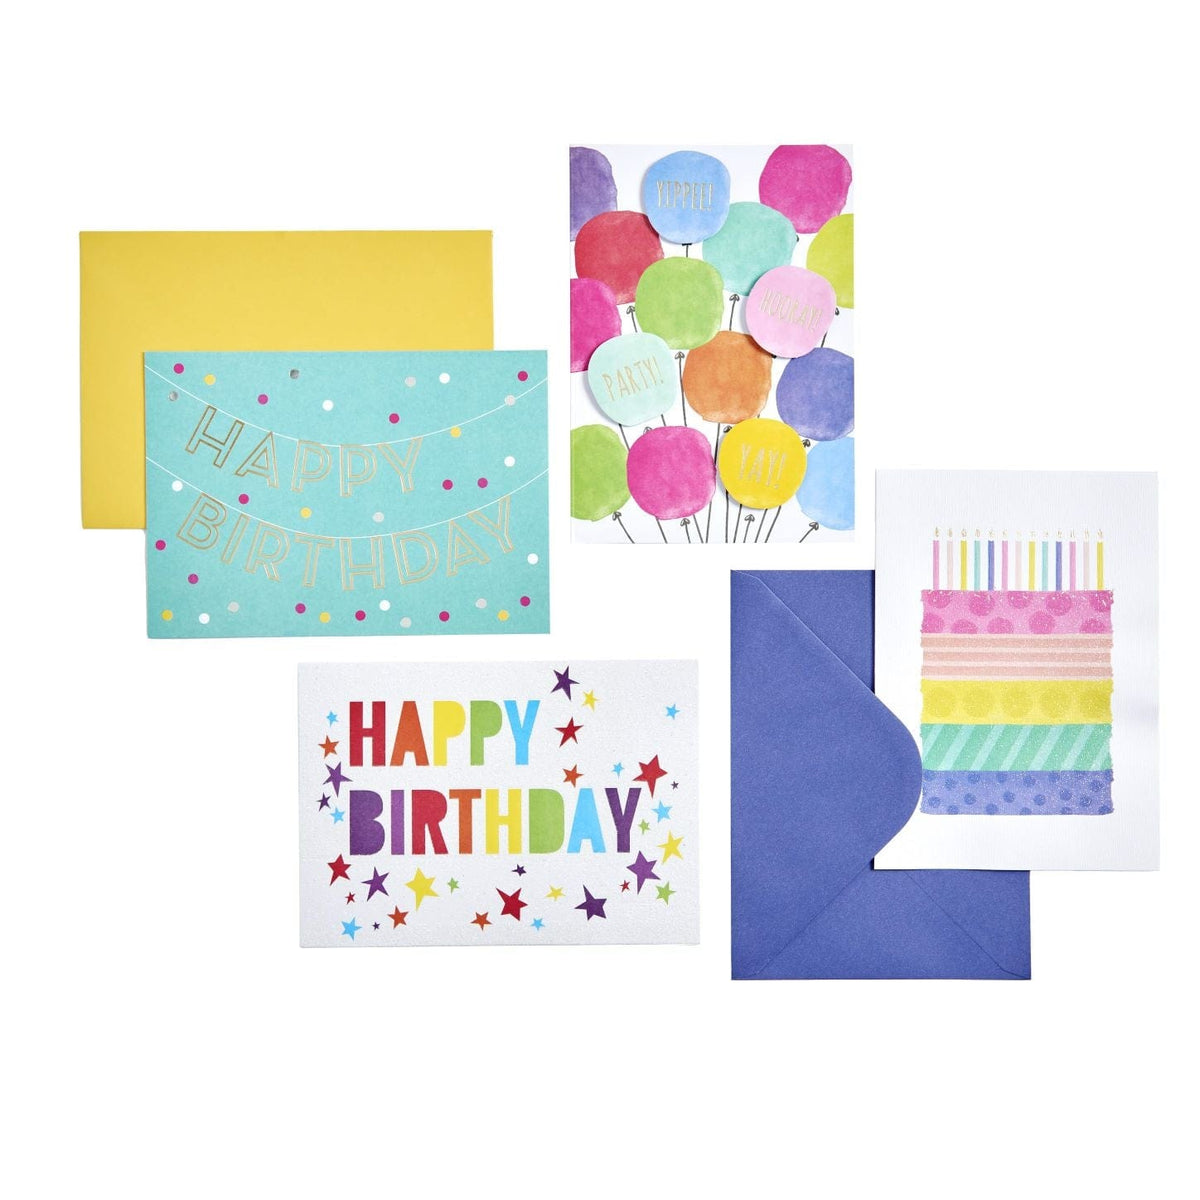 Yippee! Happy Birthday - Greeting Card Kit Gartner Studios Greeting Cards 93363